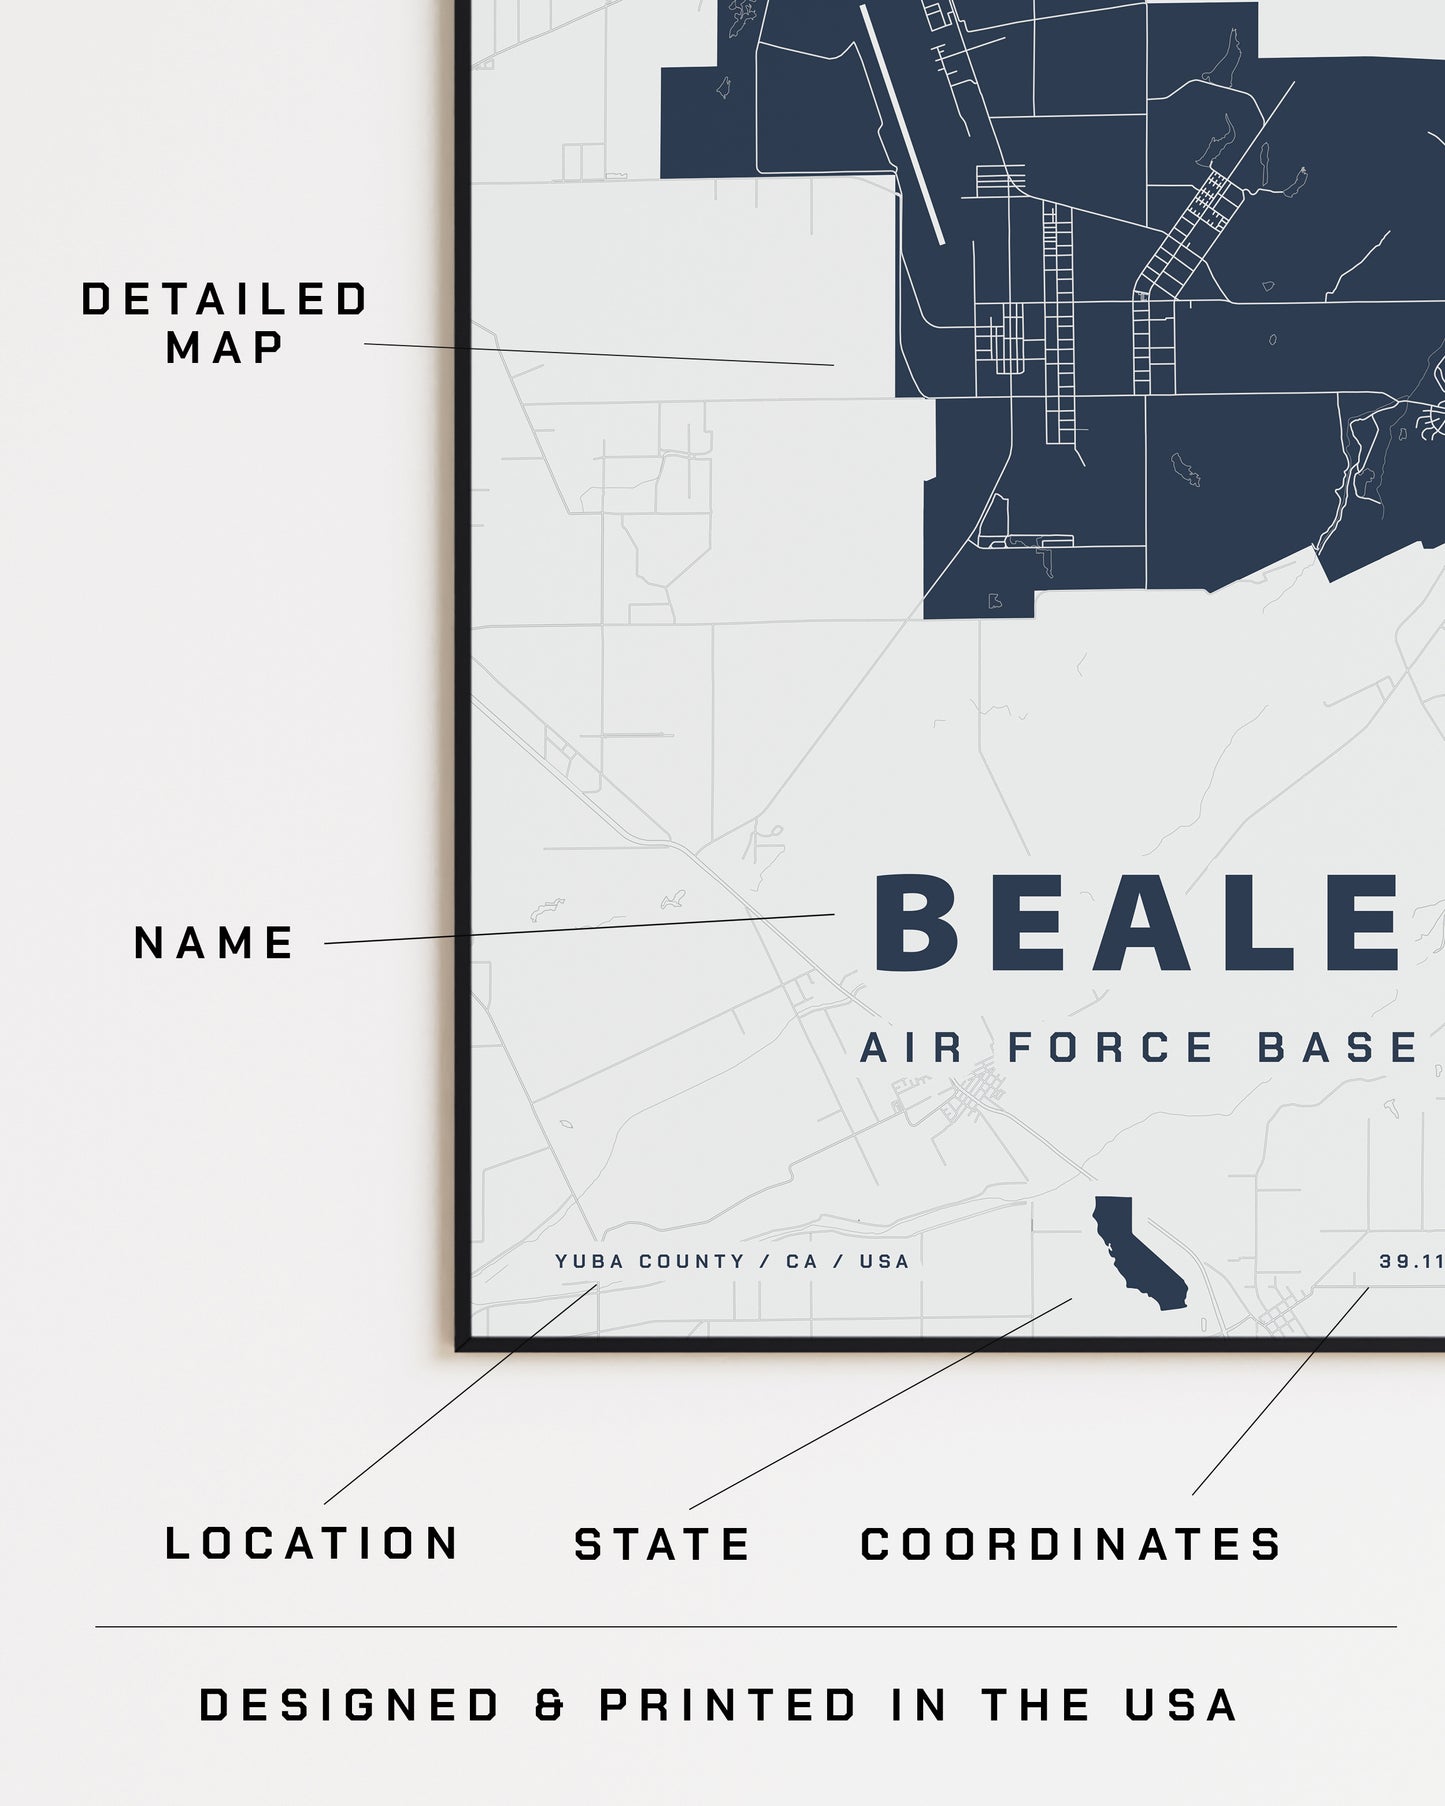 Beale Air Force Base Map Print